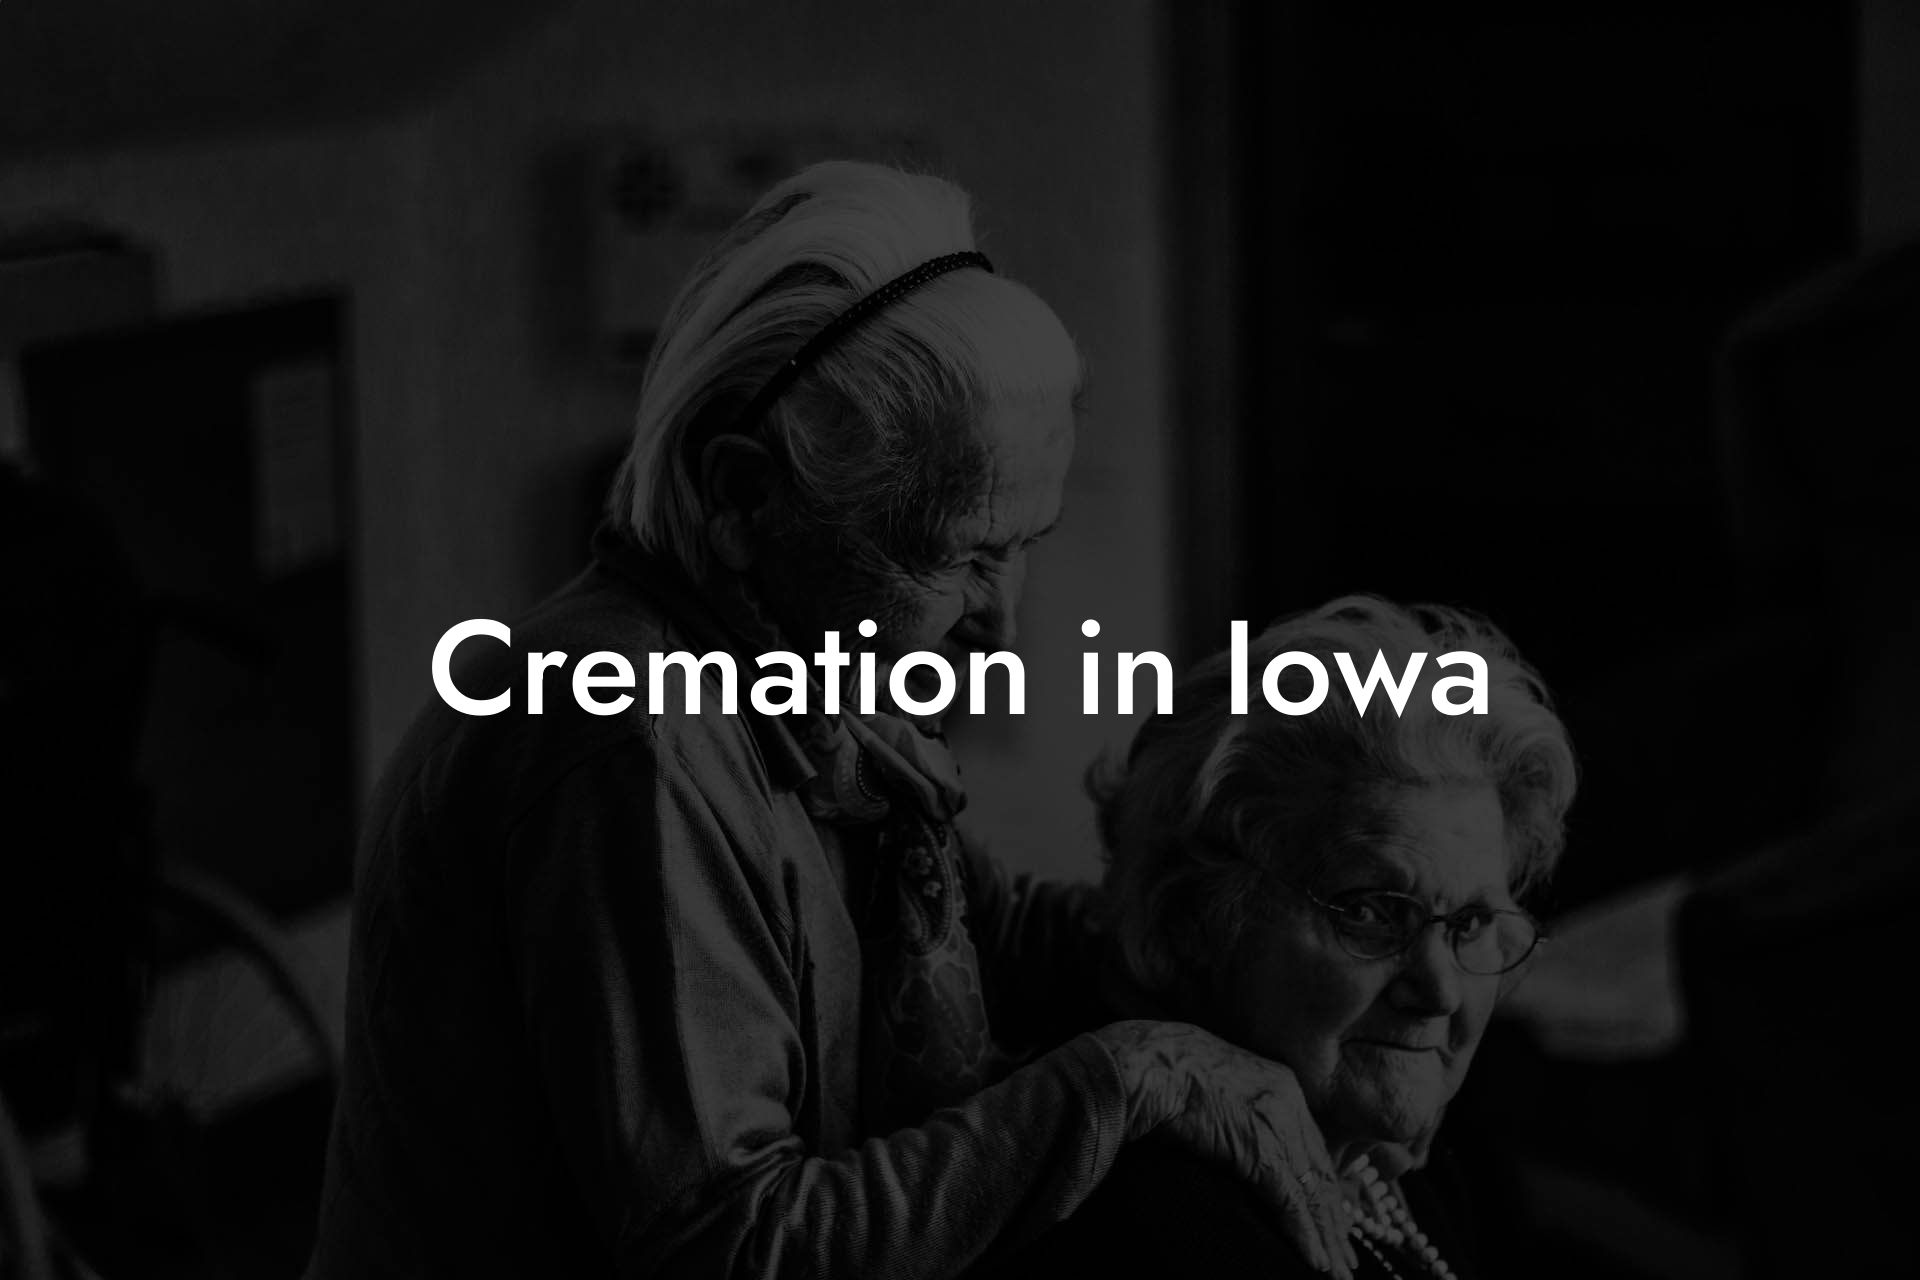 Cremation in Iowa